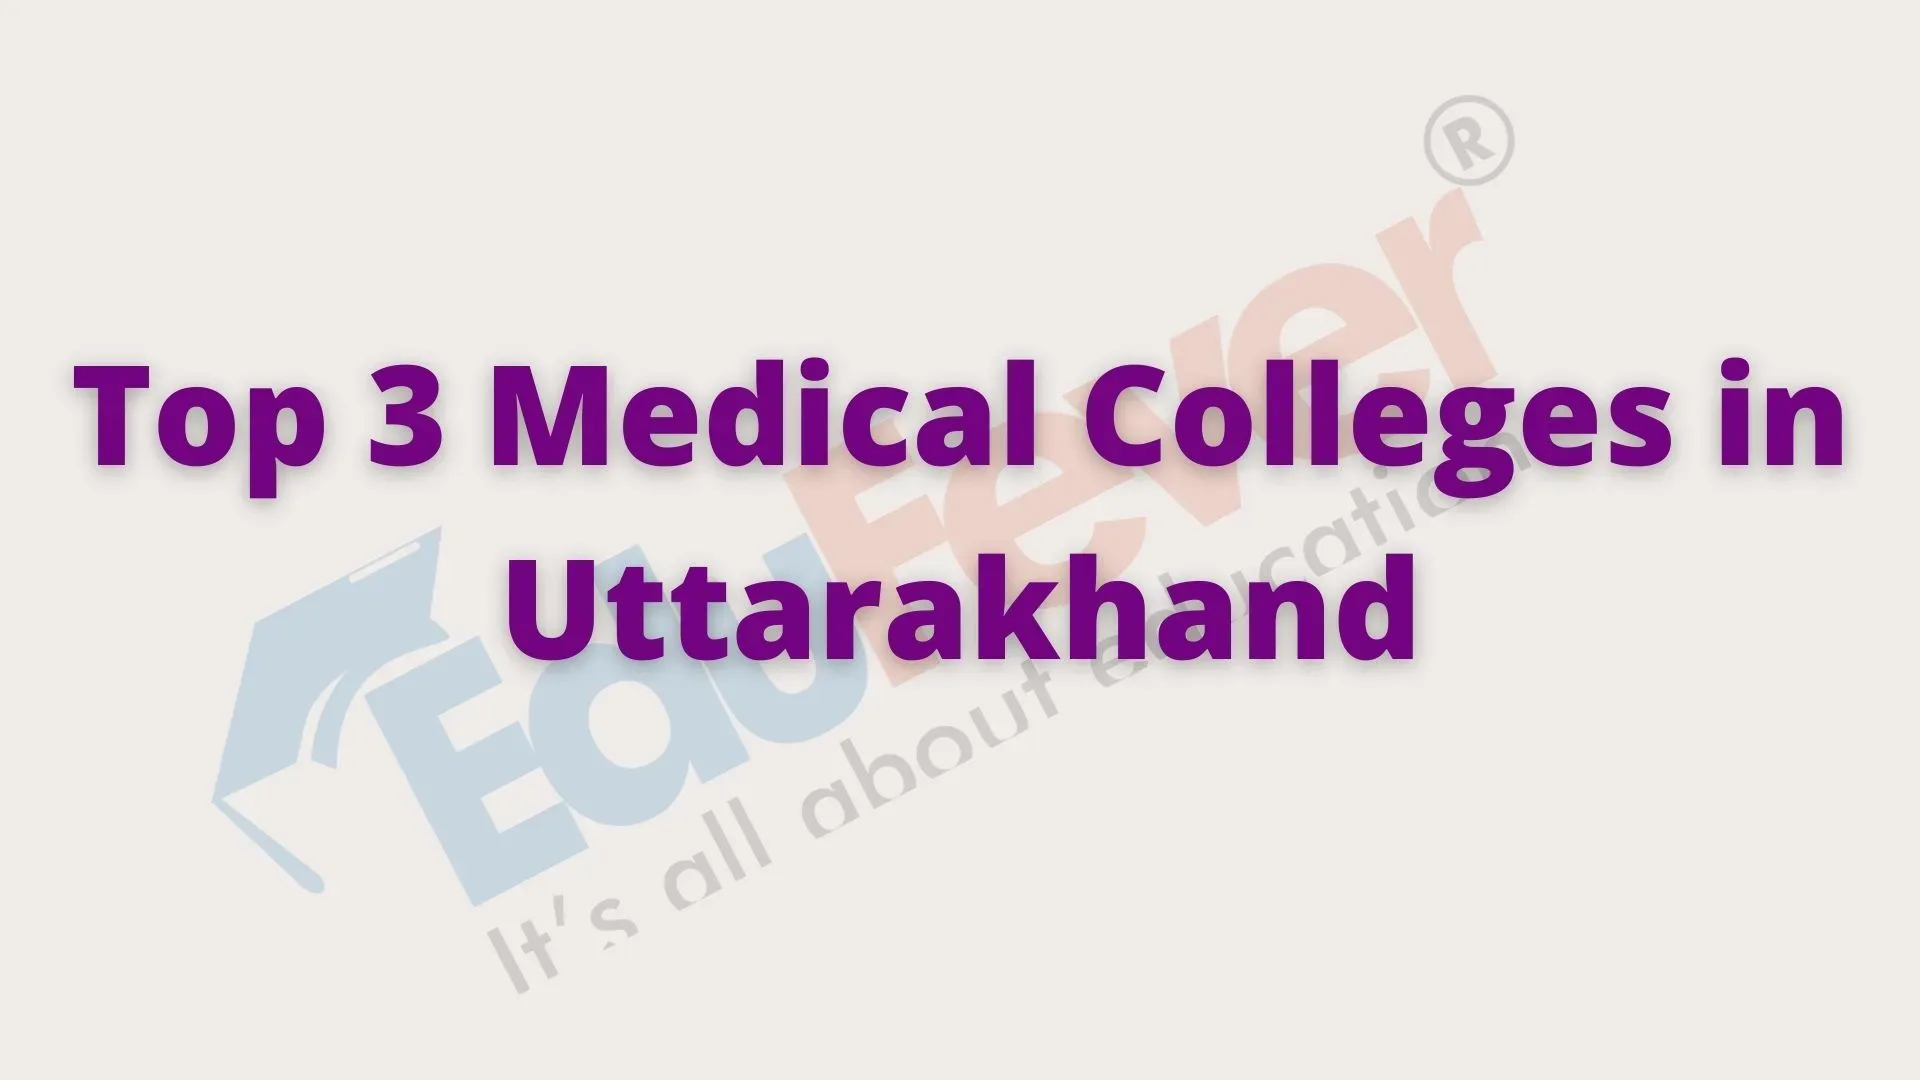 Top 3 Medical Colleges in Uttarakhand